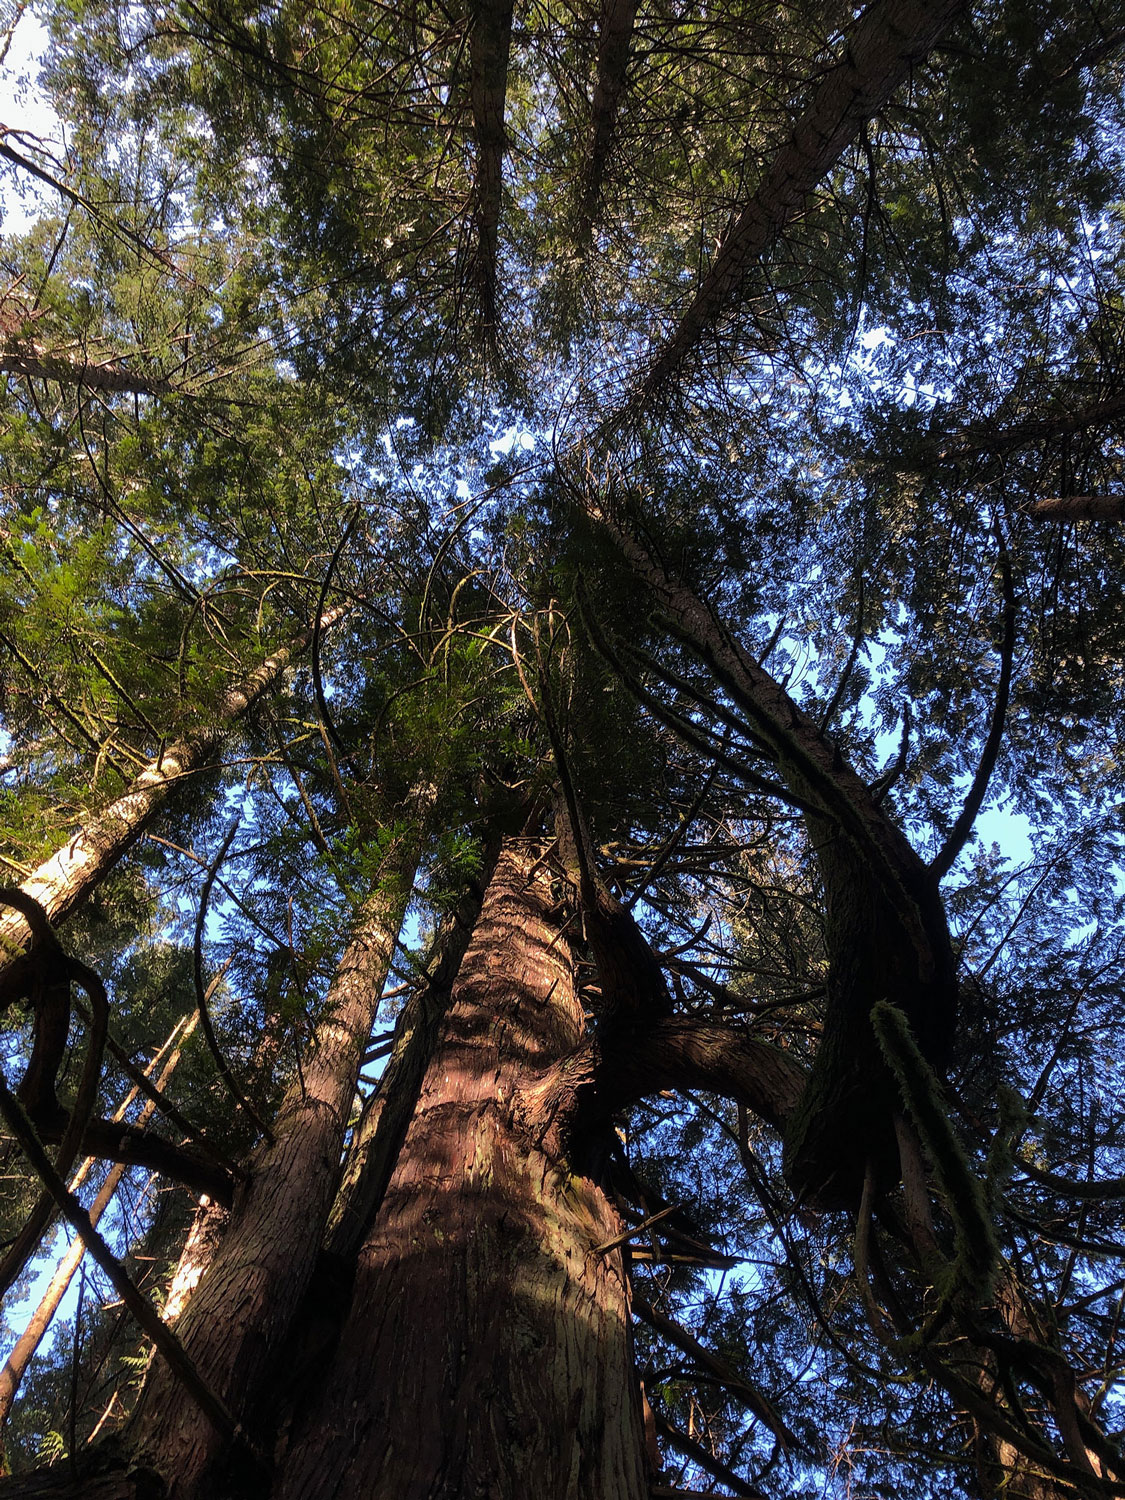 View of treetops including the elder cedar